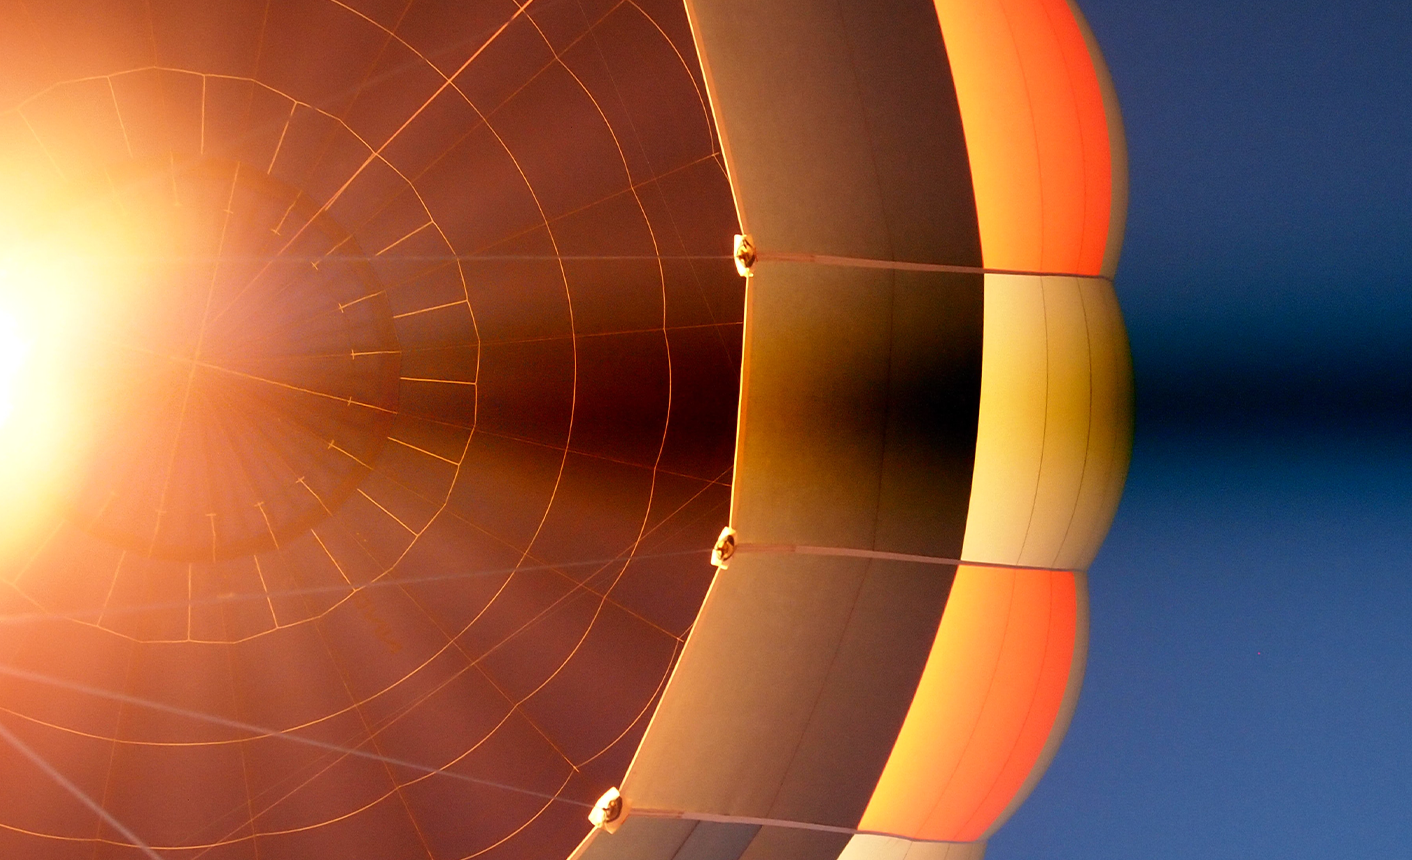 upward view of light shining through an orange hot air balloon against a blue sky